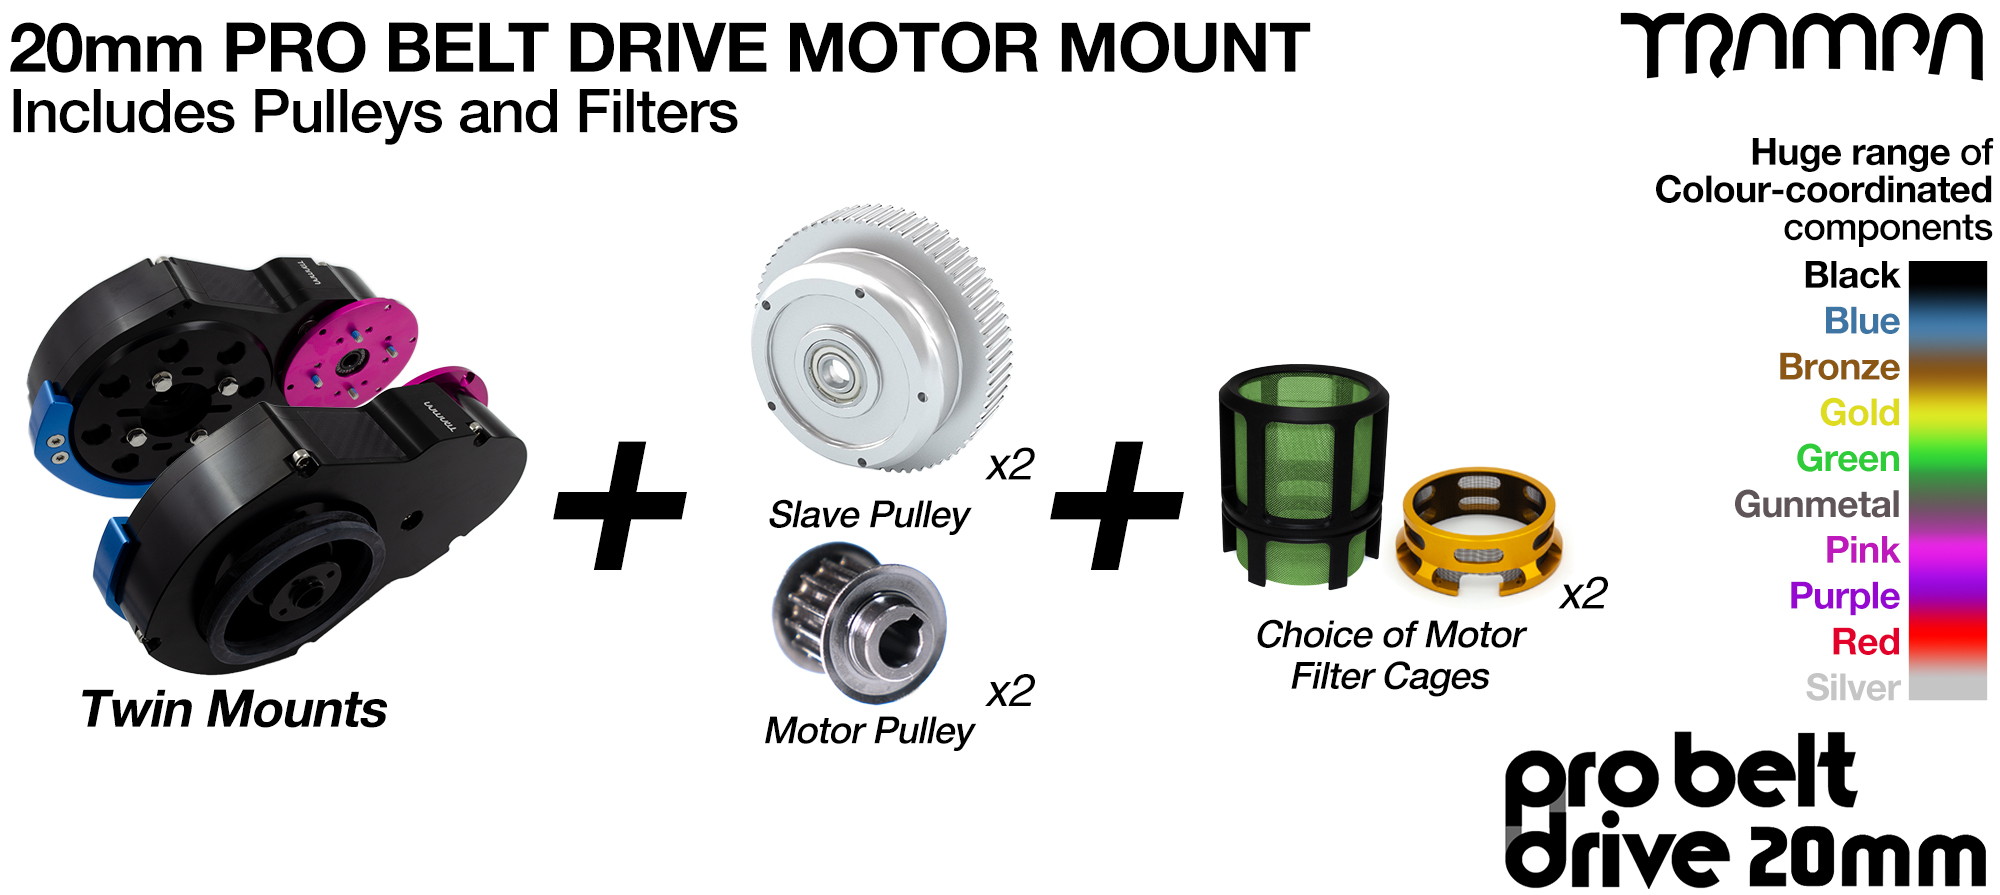 20mm PRO BELT DRIVE Motor Mounts with FILTERS & PULLEYS - NO Motors